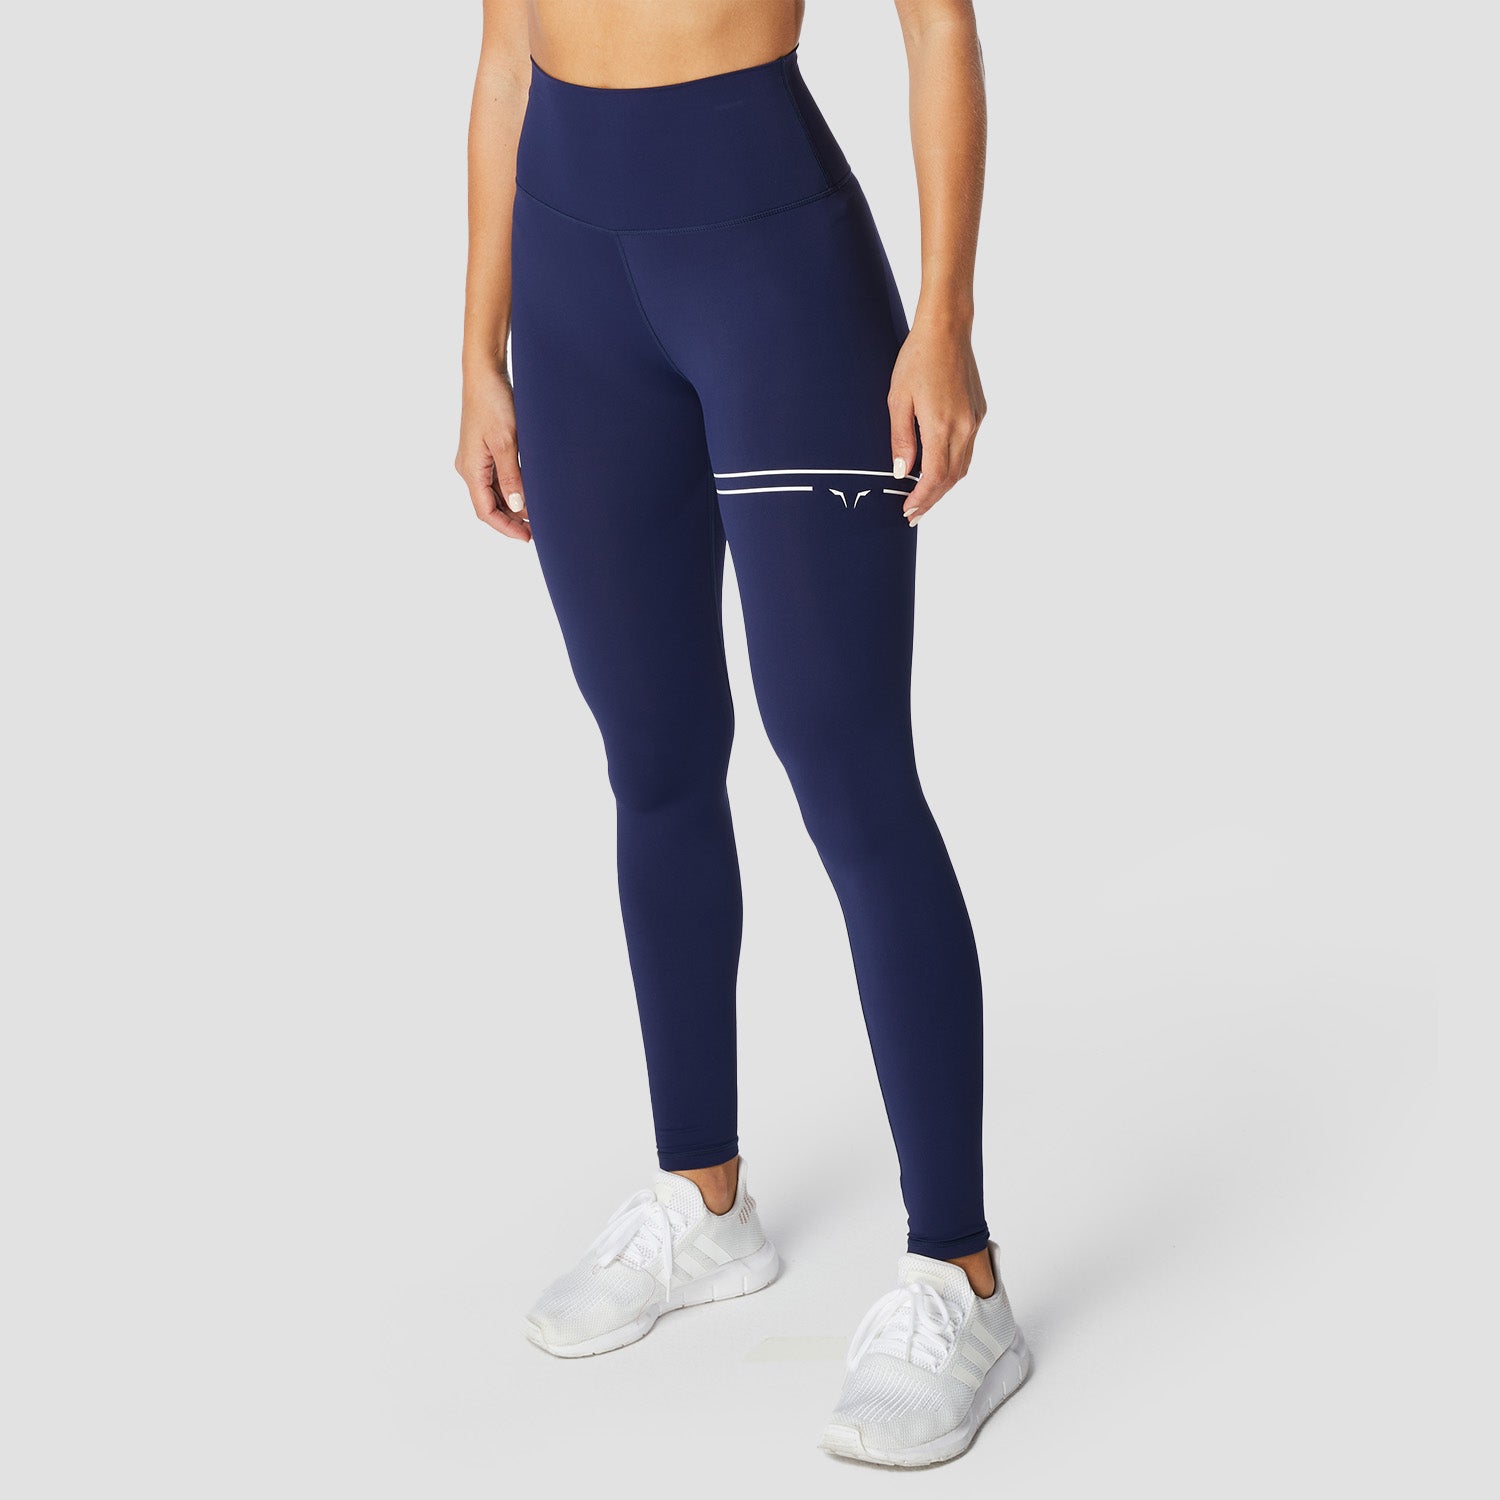 squatwolf-workout-clothes-flux-leggings-navy-gym-leggings-for-women